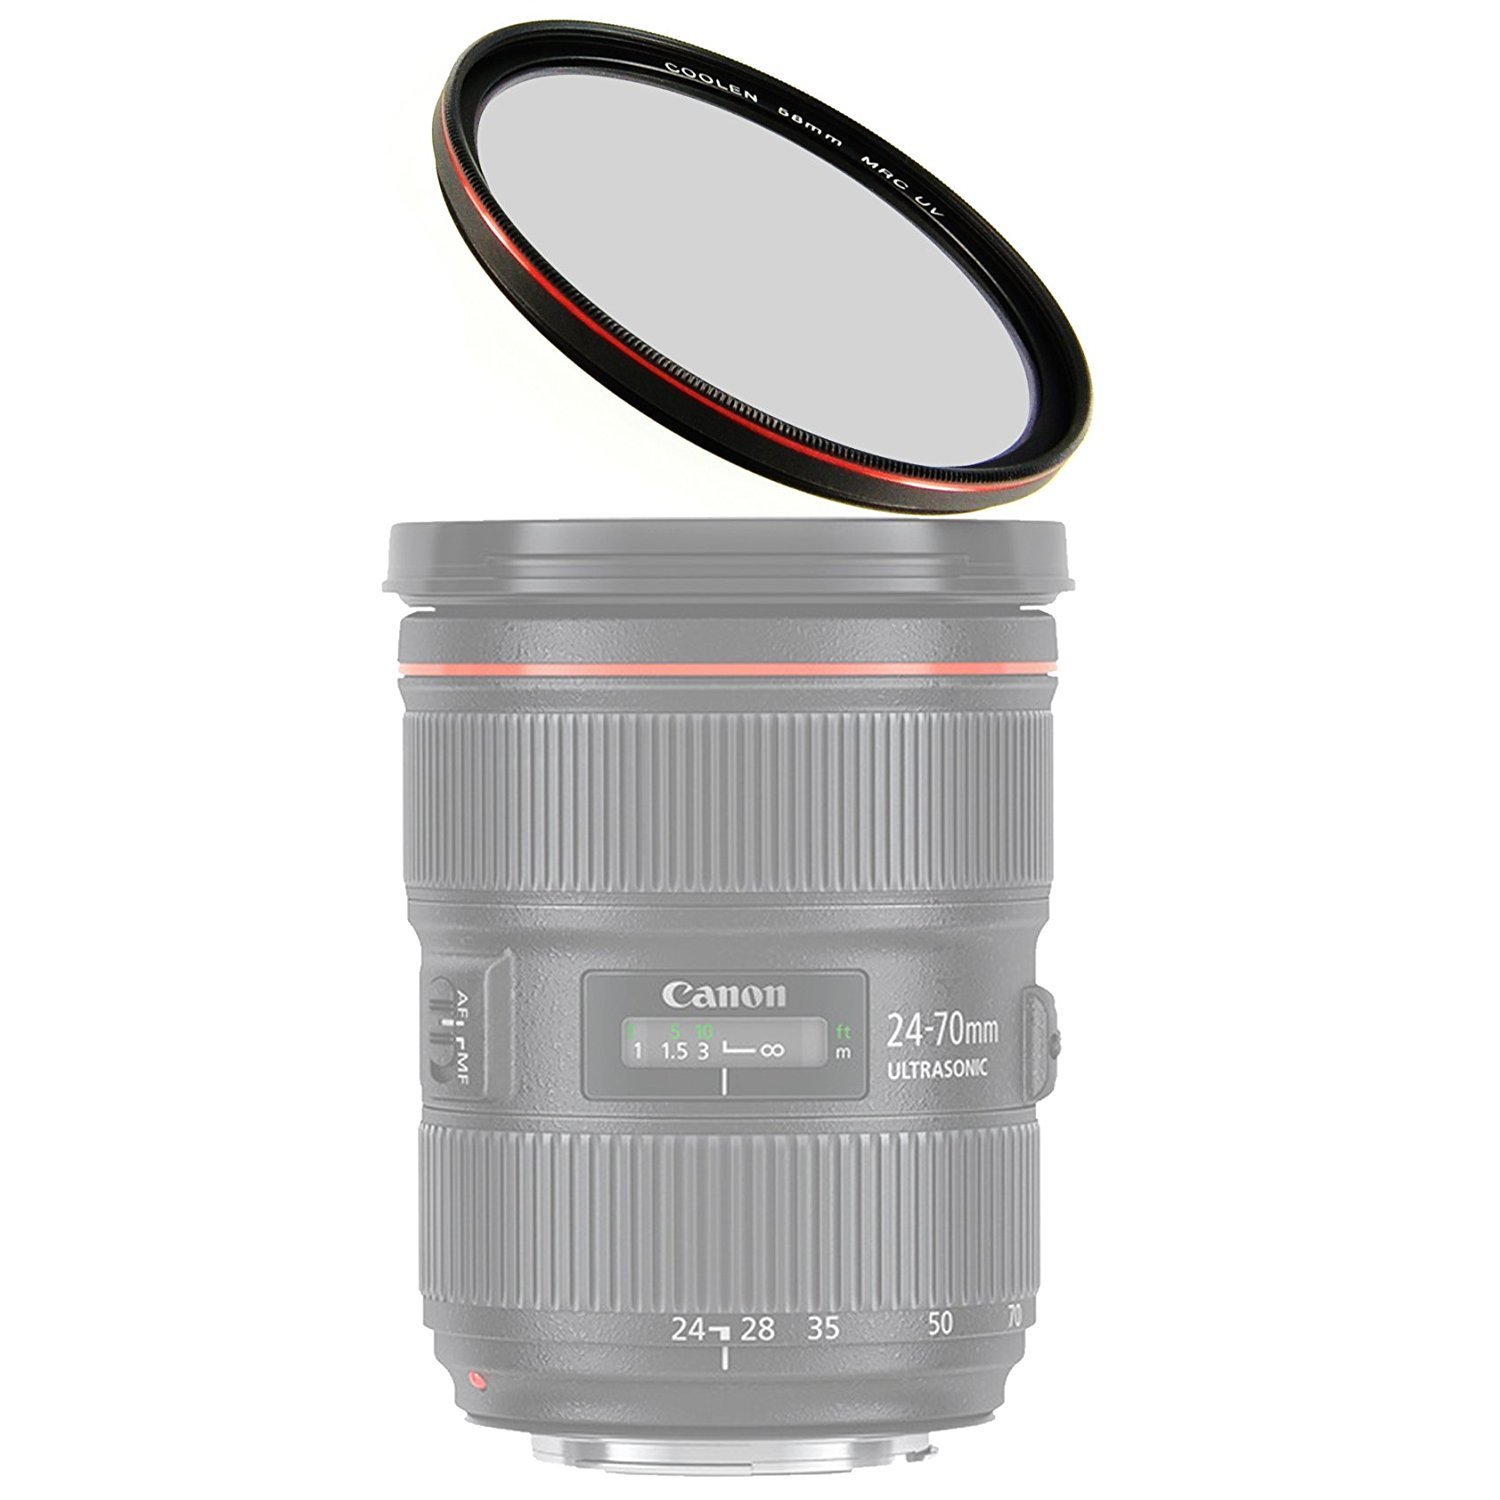 Coolen 40.5mm MRC Ultra Thin Multi-coated UV Filter Red Plating for Nikon 1 AW1, 1 J1, 1 J2, 1 J3, 1 J4, 1 J5, 1 V1, 1 V2, 1 V3, 1 S1, 1 S2 Mirrorless Digital Camera (10-30mm, 30-110mm, 10mm Lenses) - image 1 of 7